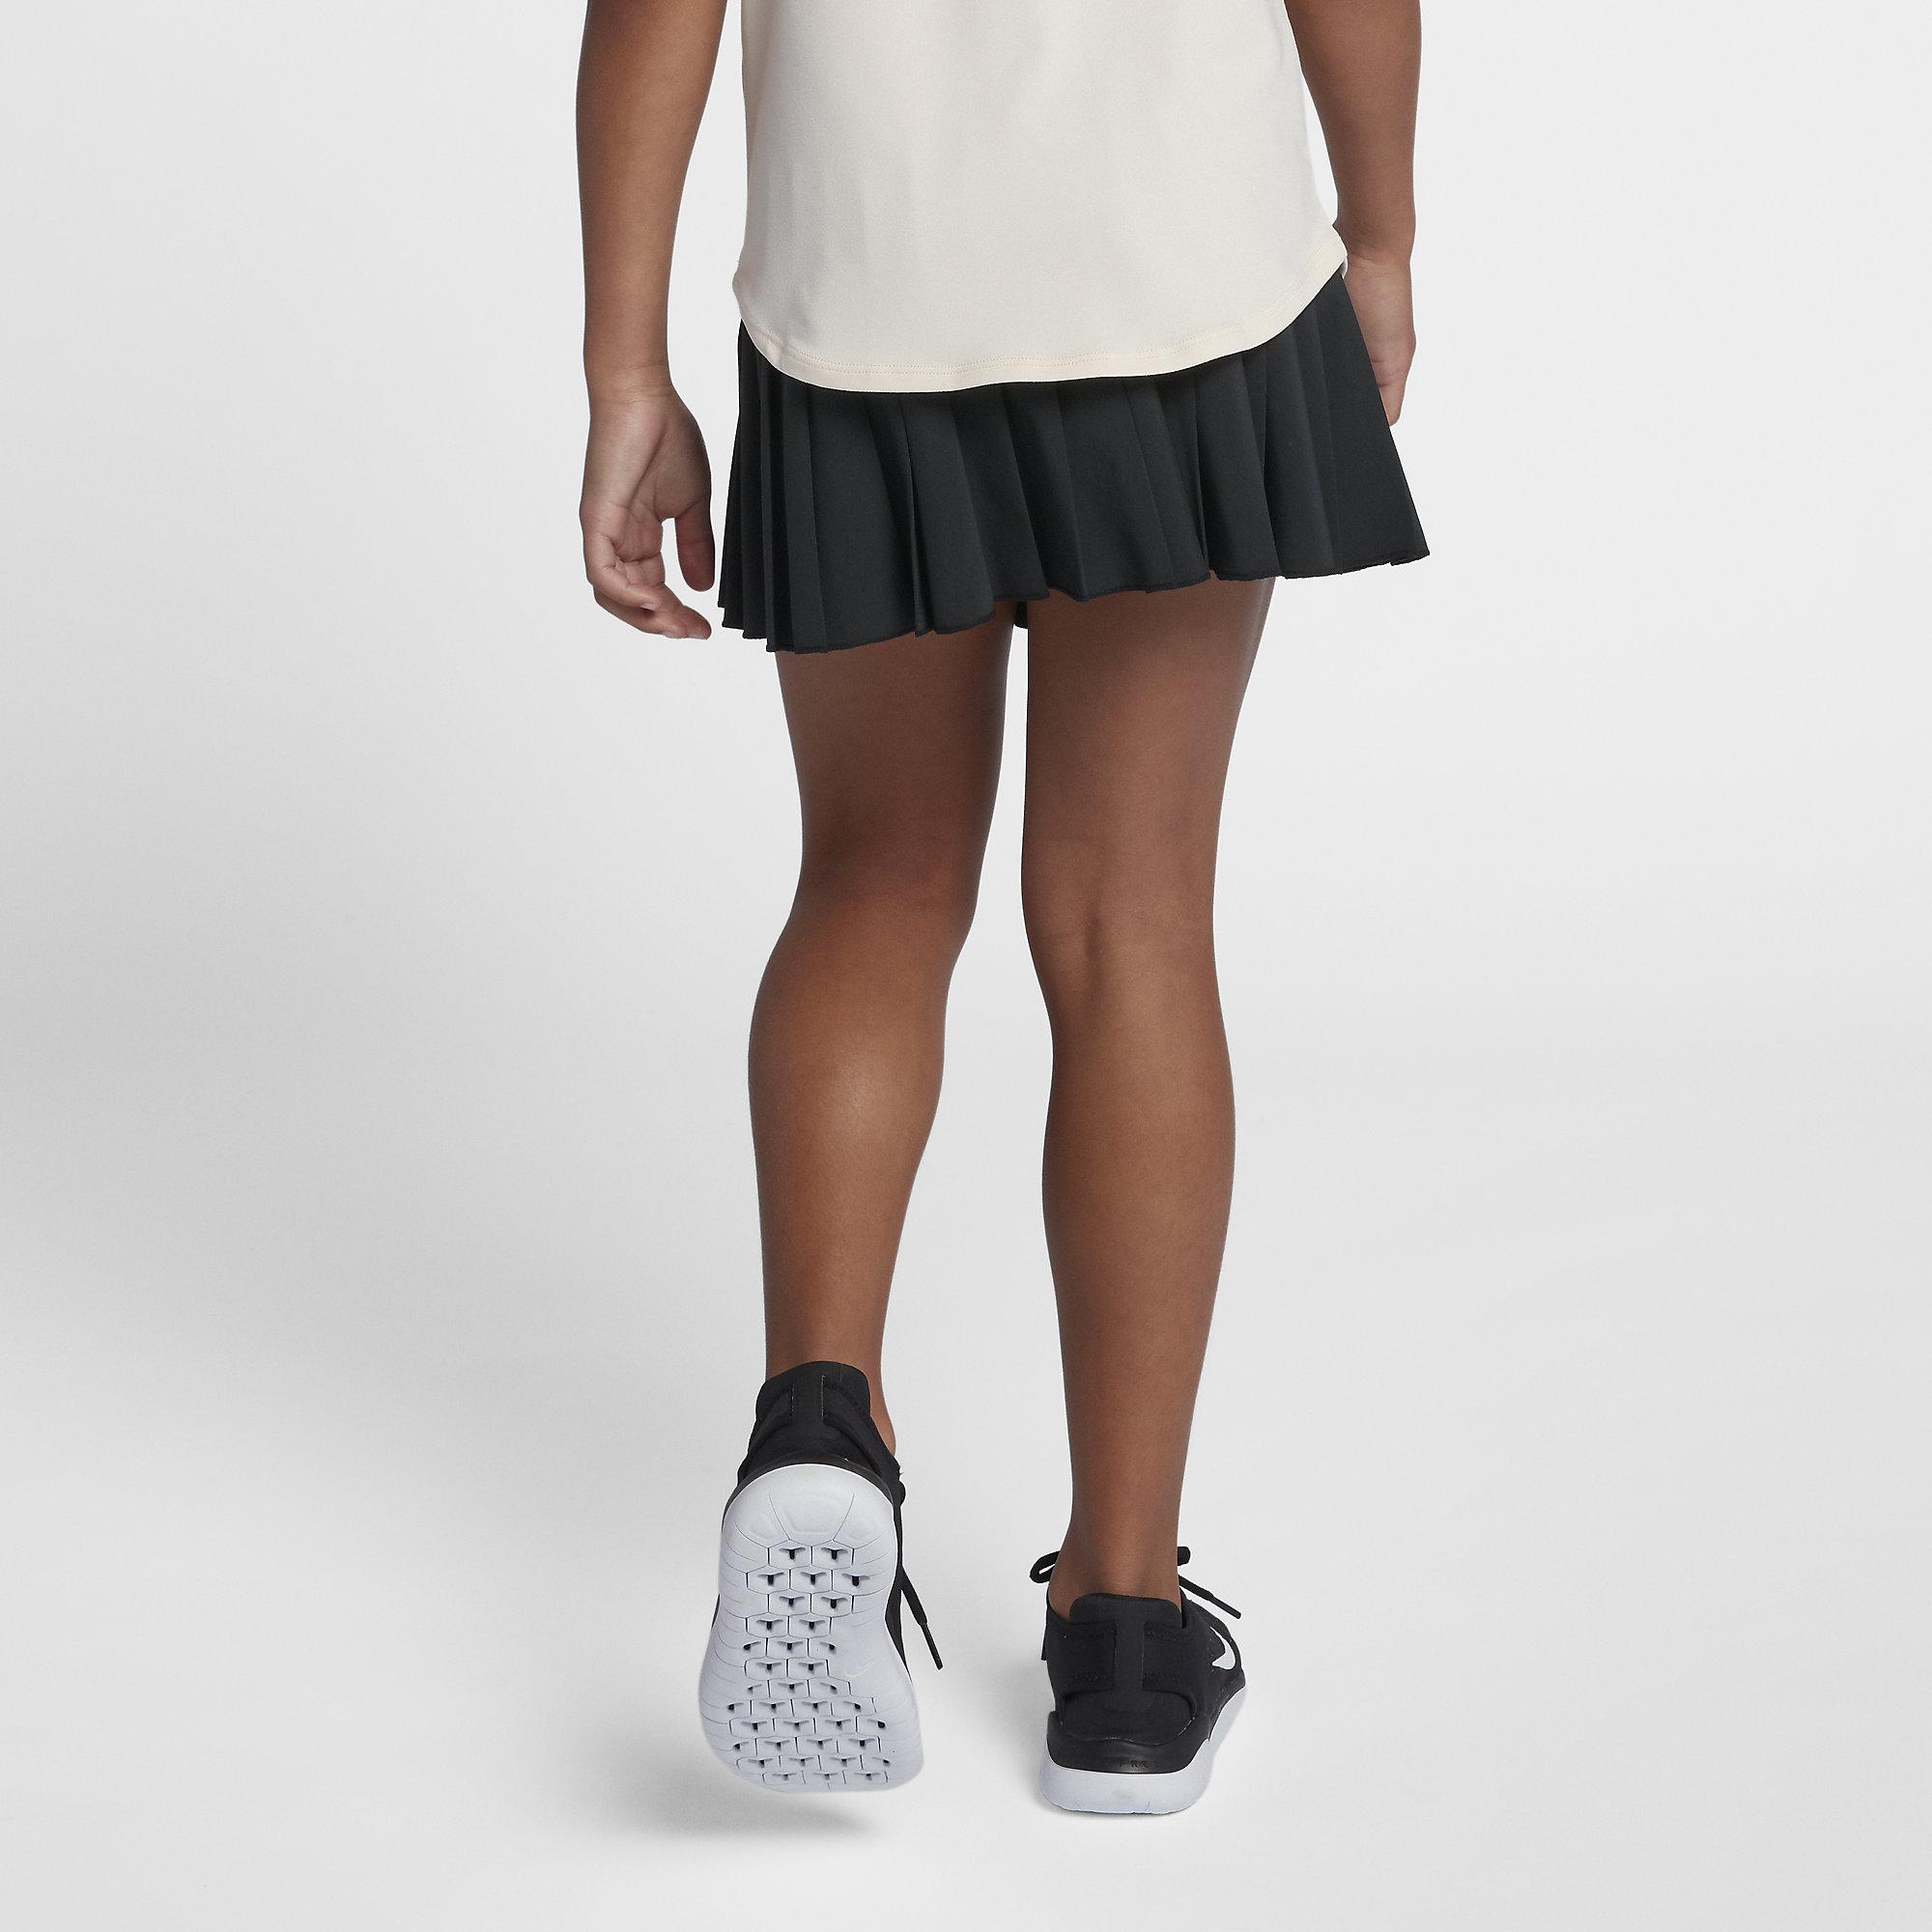 Nike Girls Victory Tennis Skort - Black - Tennisnuts.com